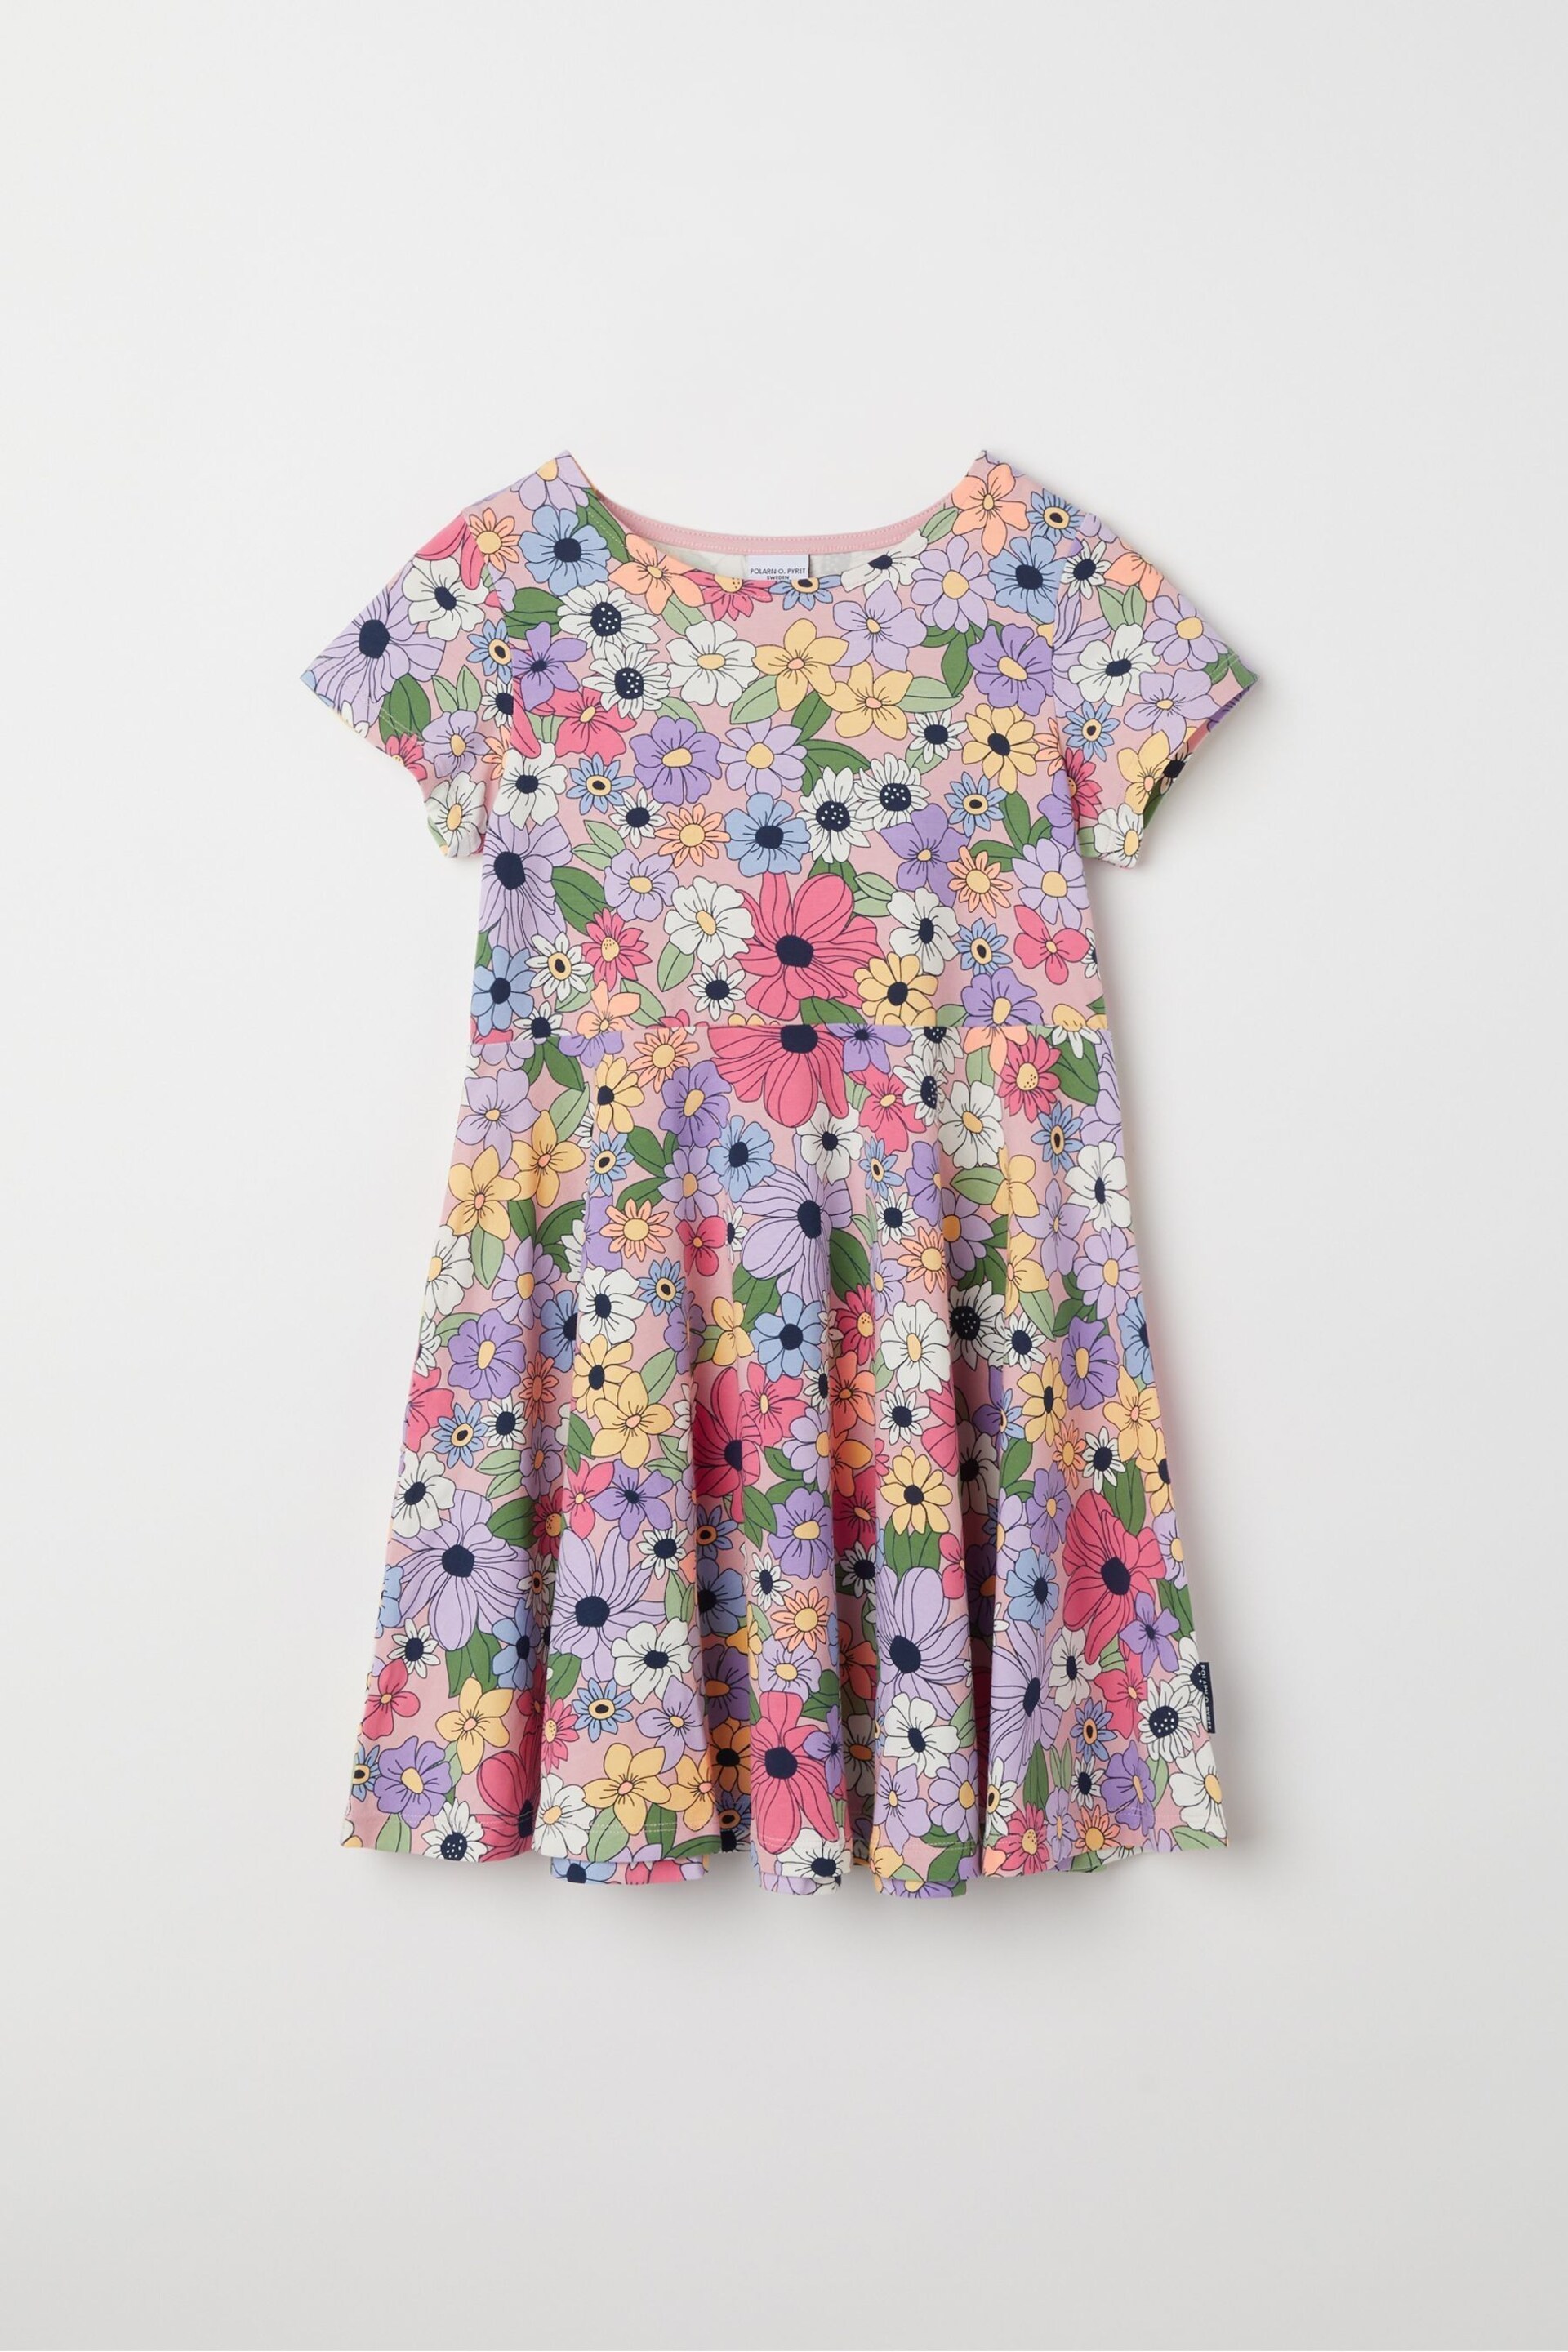 Polarn O. Pyret Pink Organic Floral Print Dress - Image 3 of 4